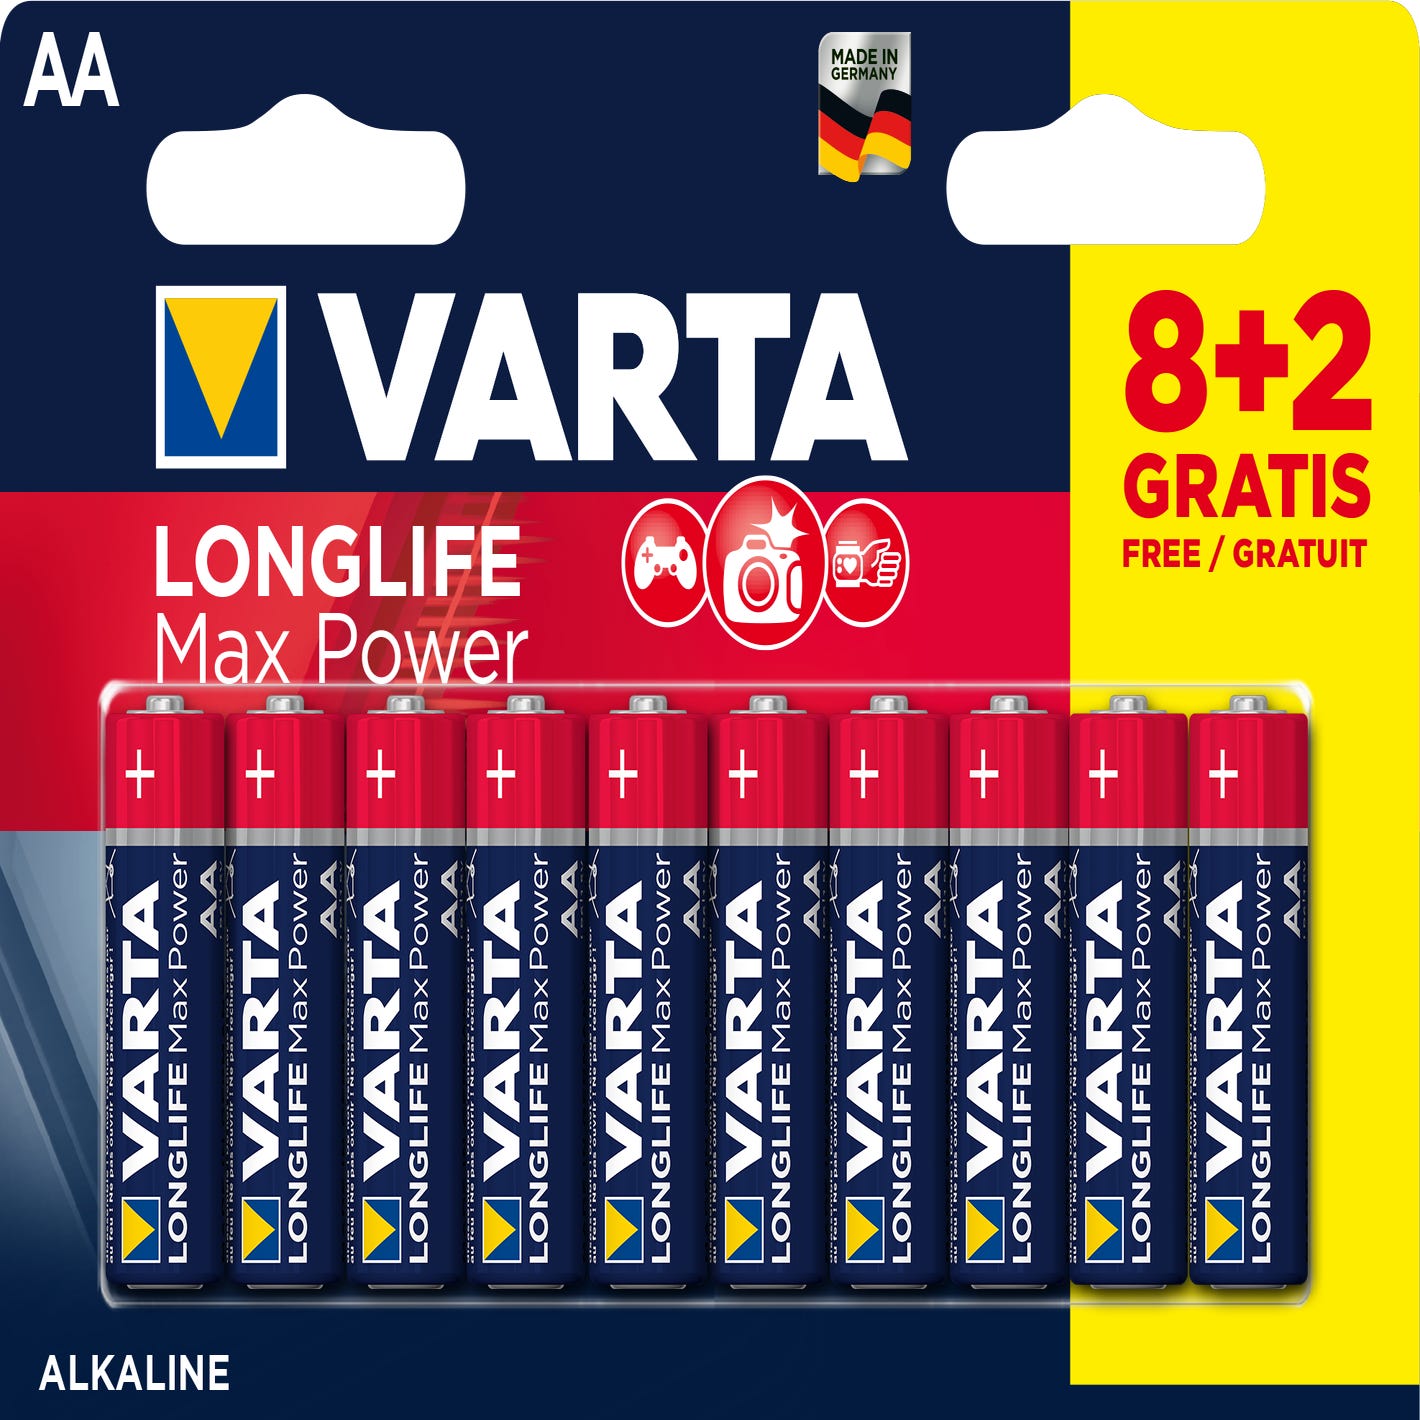 VARTA LONGLIFE POWER PILE ALCALINE AA/LR06 6+2 GRATUITES 1.5V